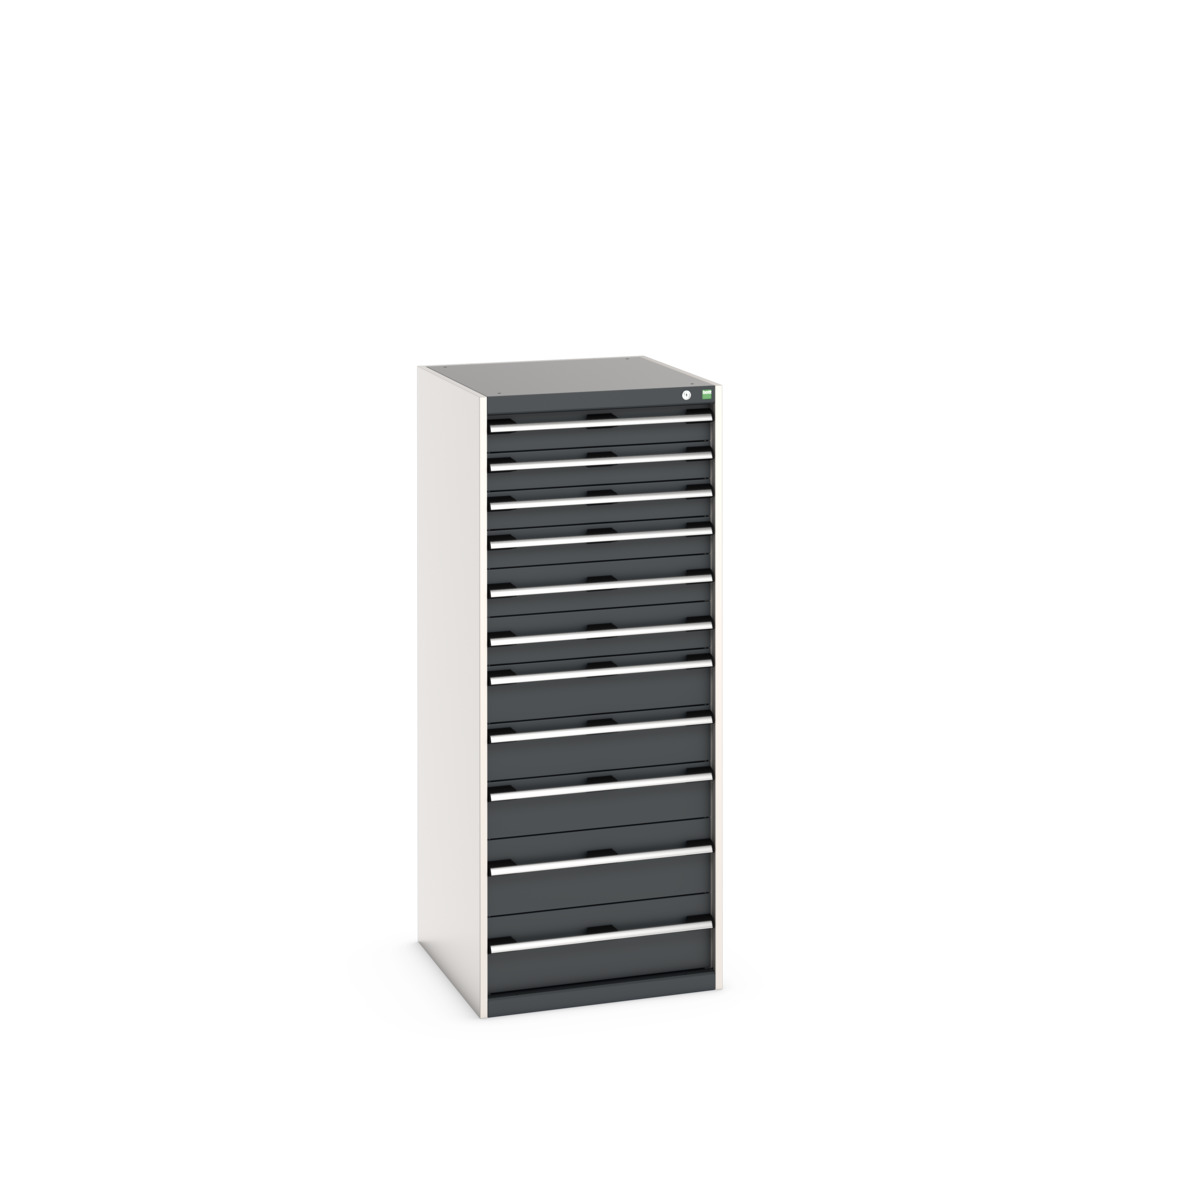 40027047. - cubio drawer cabinet